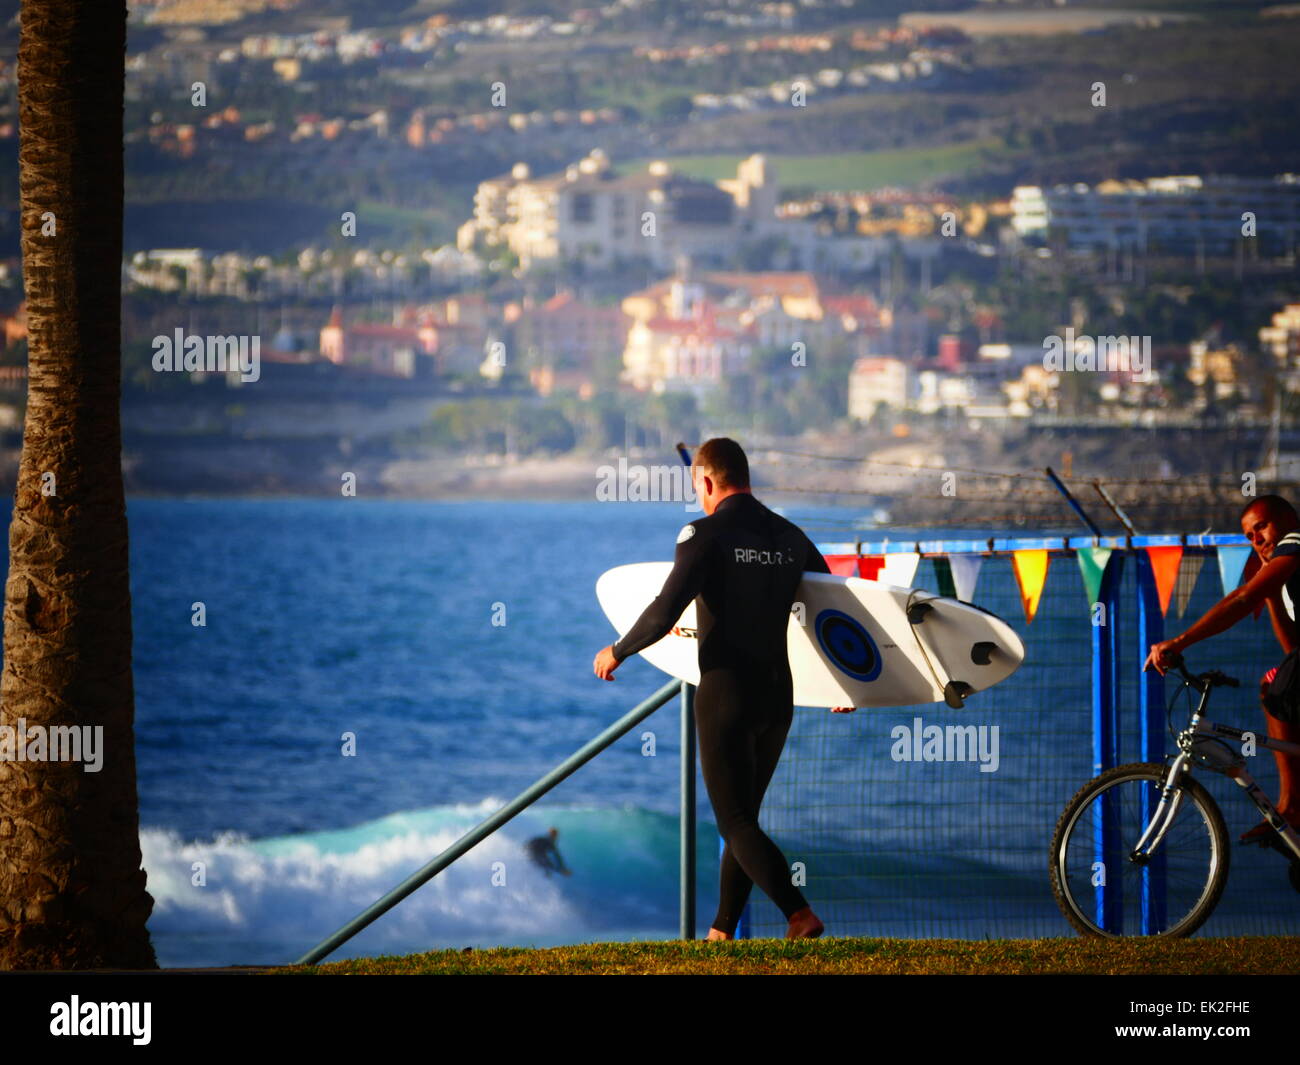 Board-Surfer at Las Americas Beach palm tree Tenerife island Canary islands Spain Stock Photo